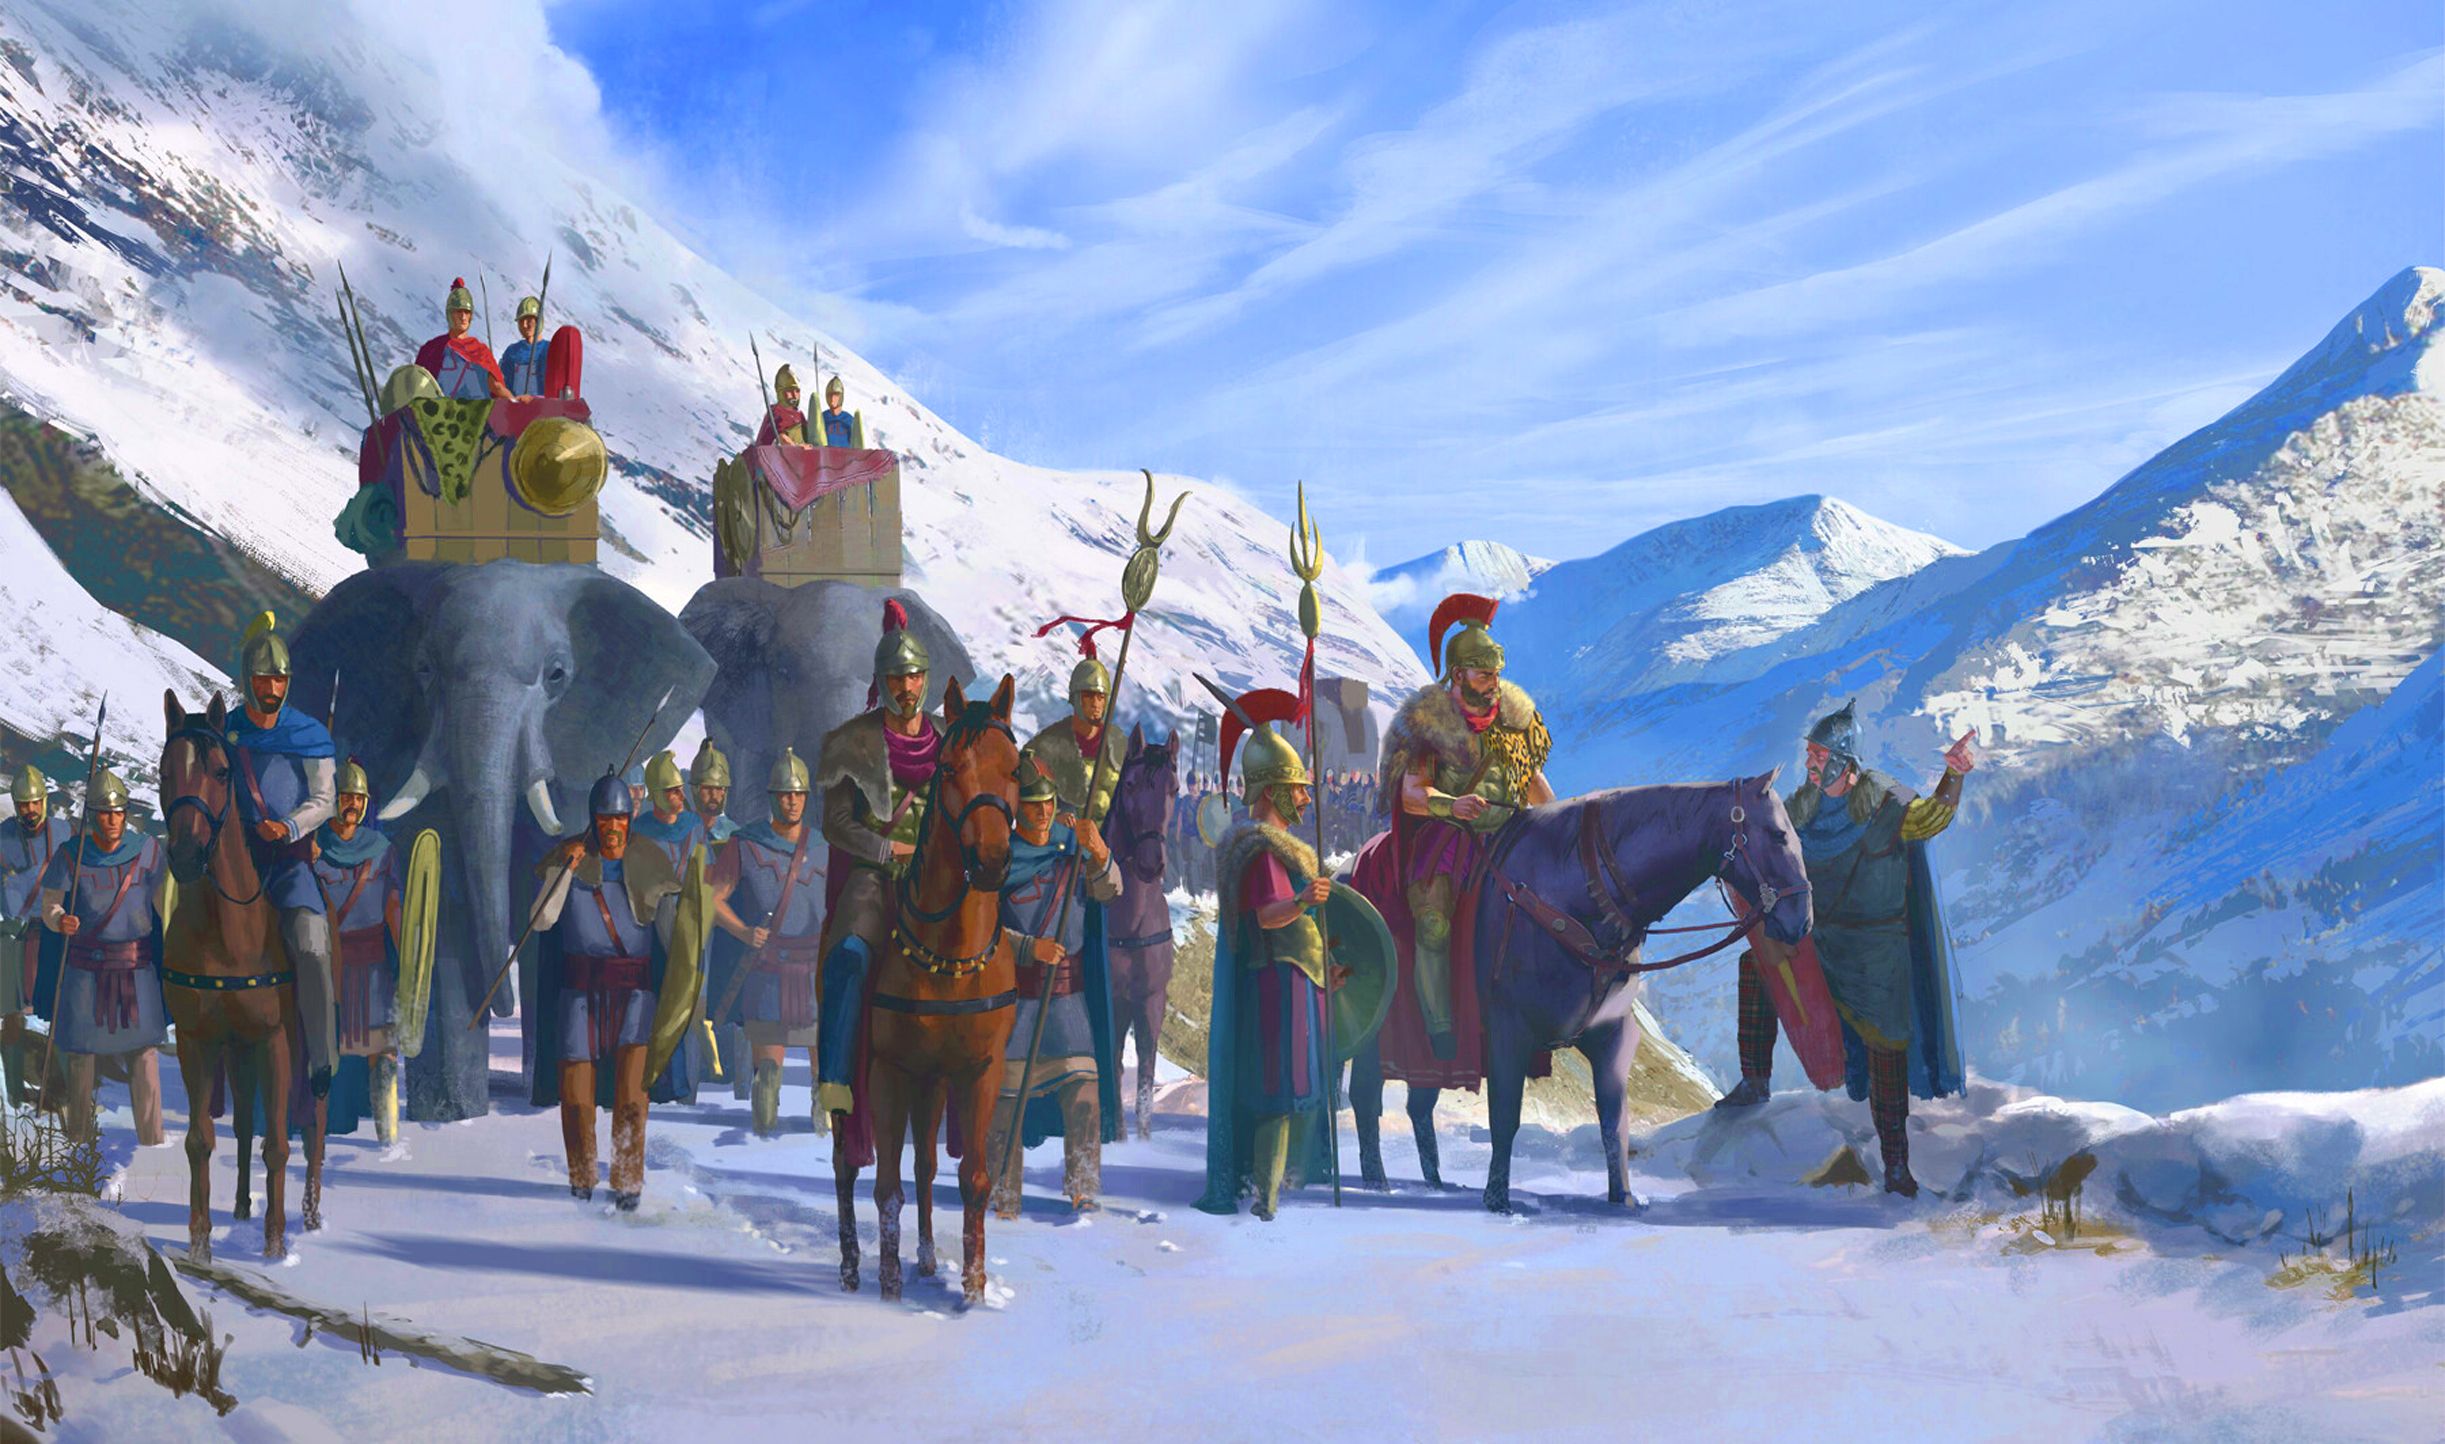 Who led Carthage across the Alps?